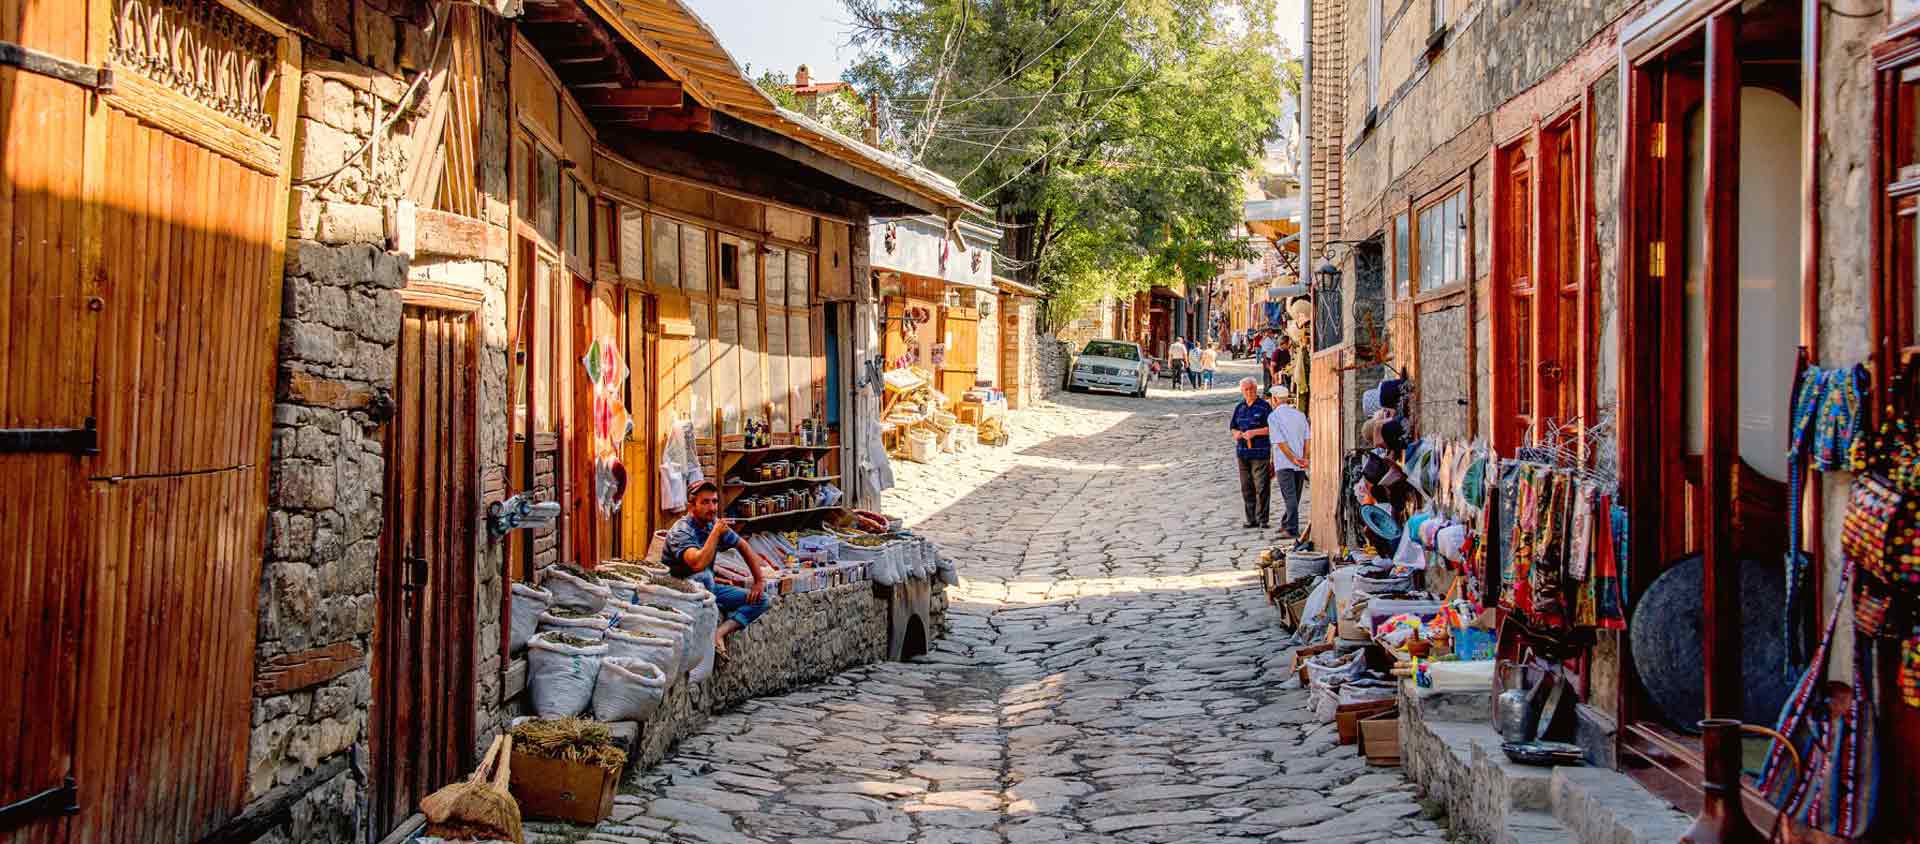 Caucasus Tour image showing the ancient Azerbaijani city of Sheki